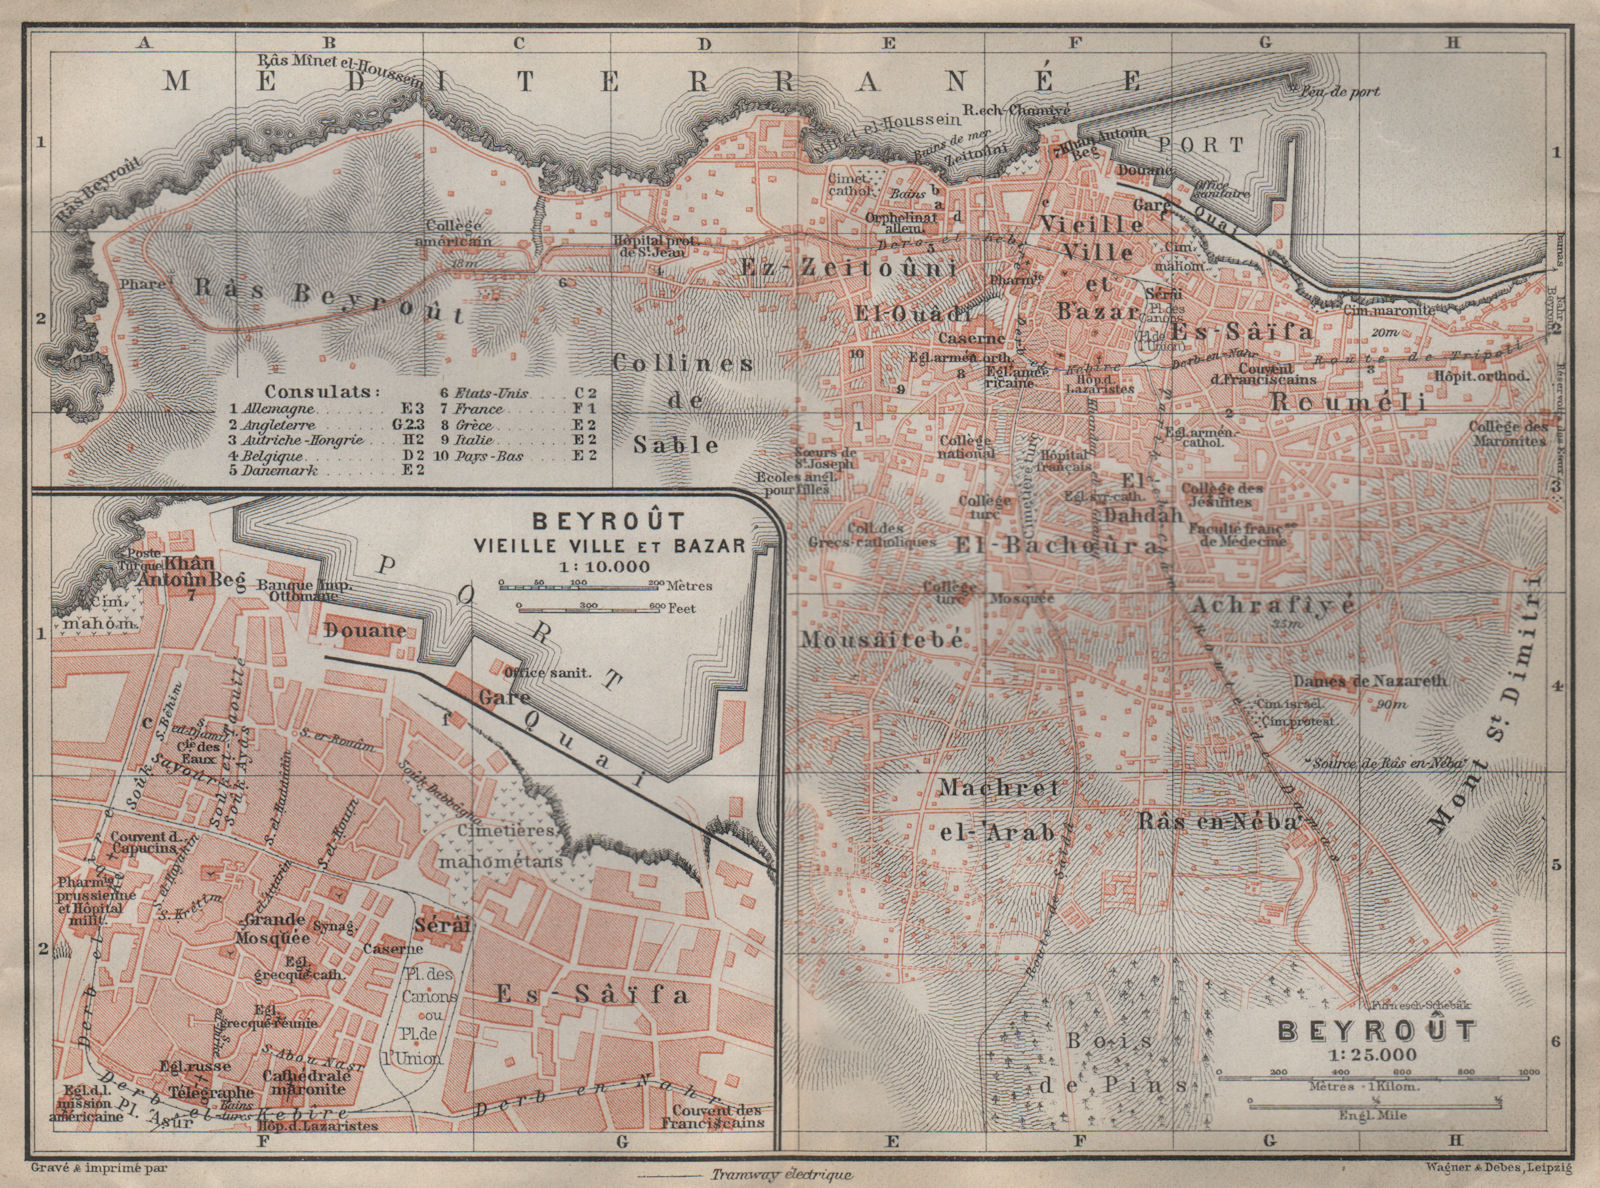 BEIRUT / BEYROUTH town city plan. Inset vieille ville & Bazar. Lebanon 1911 map